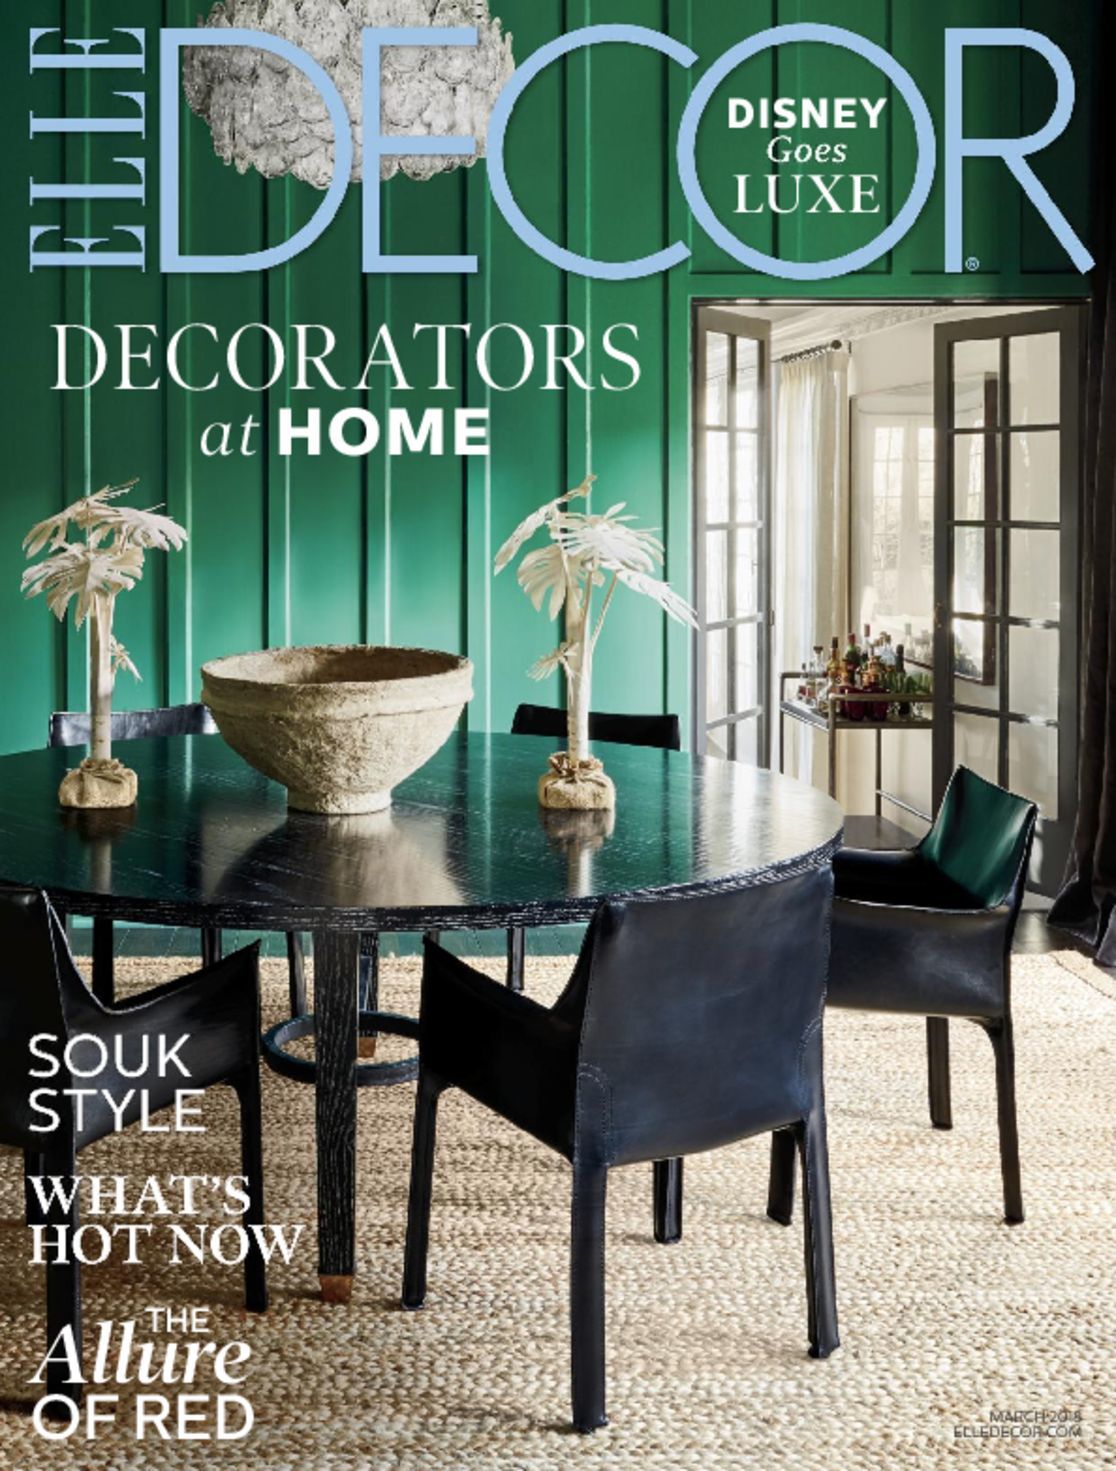 Elle Decor Magazine | Home Decorating Ideas - DiscountMags.com